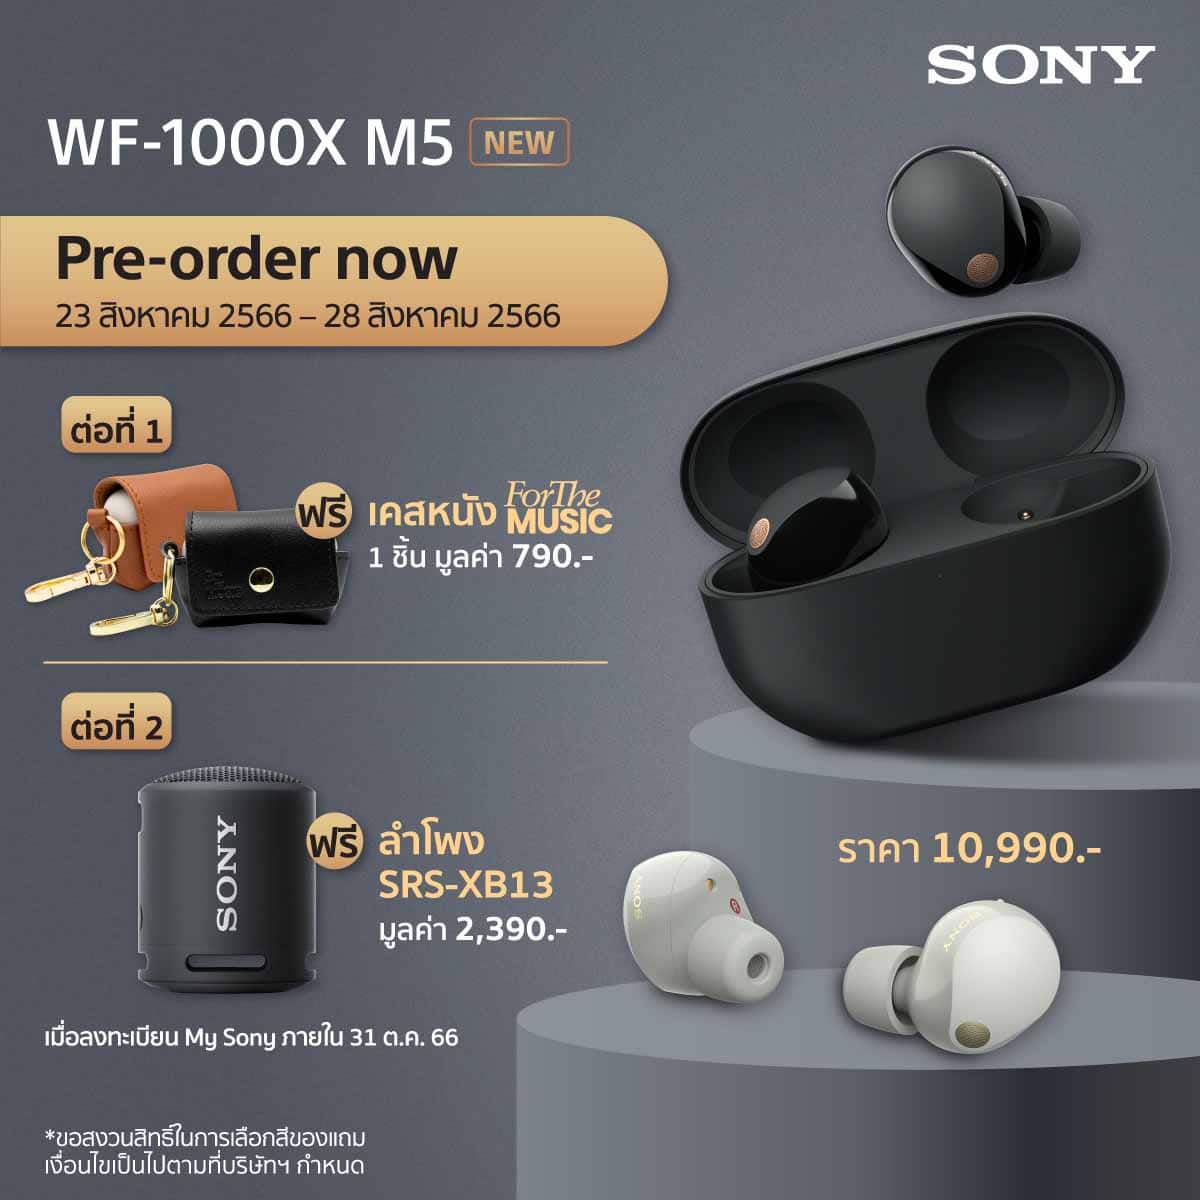 Sony WF-1000XM5 หูฟัง Pro-order